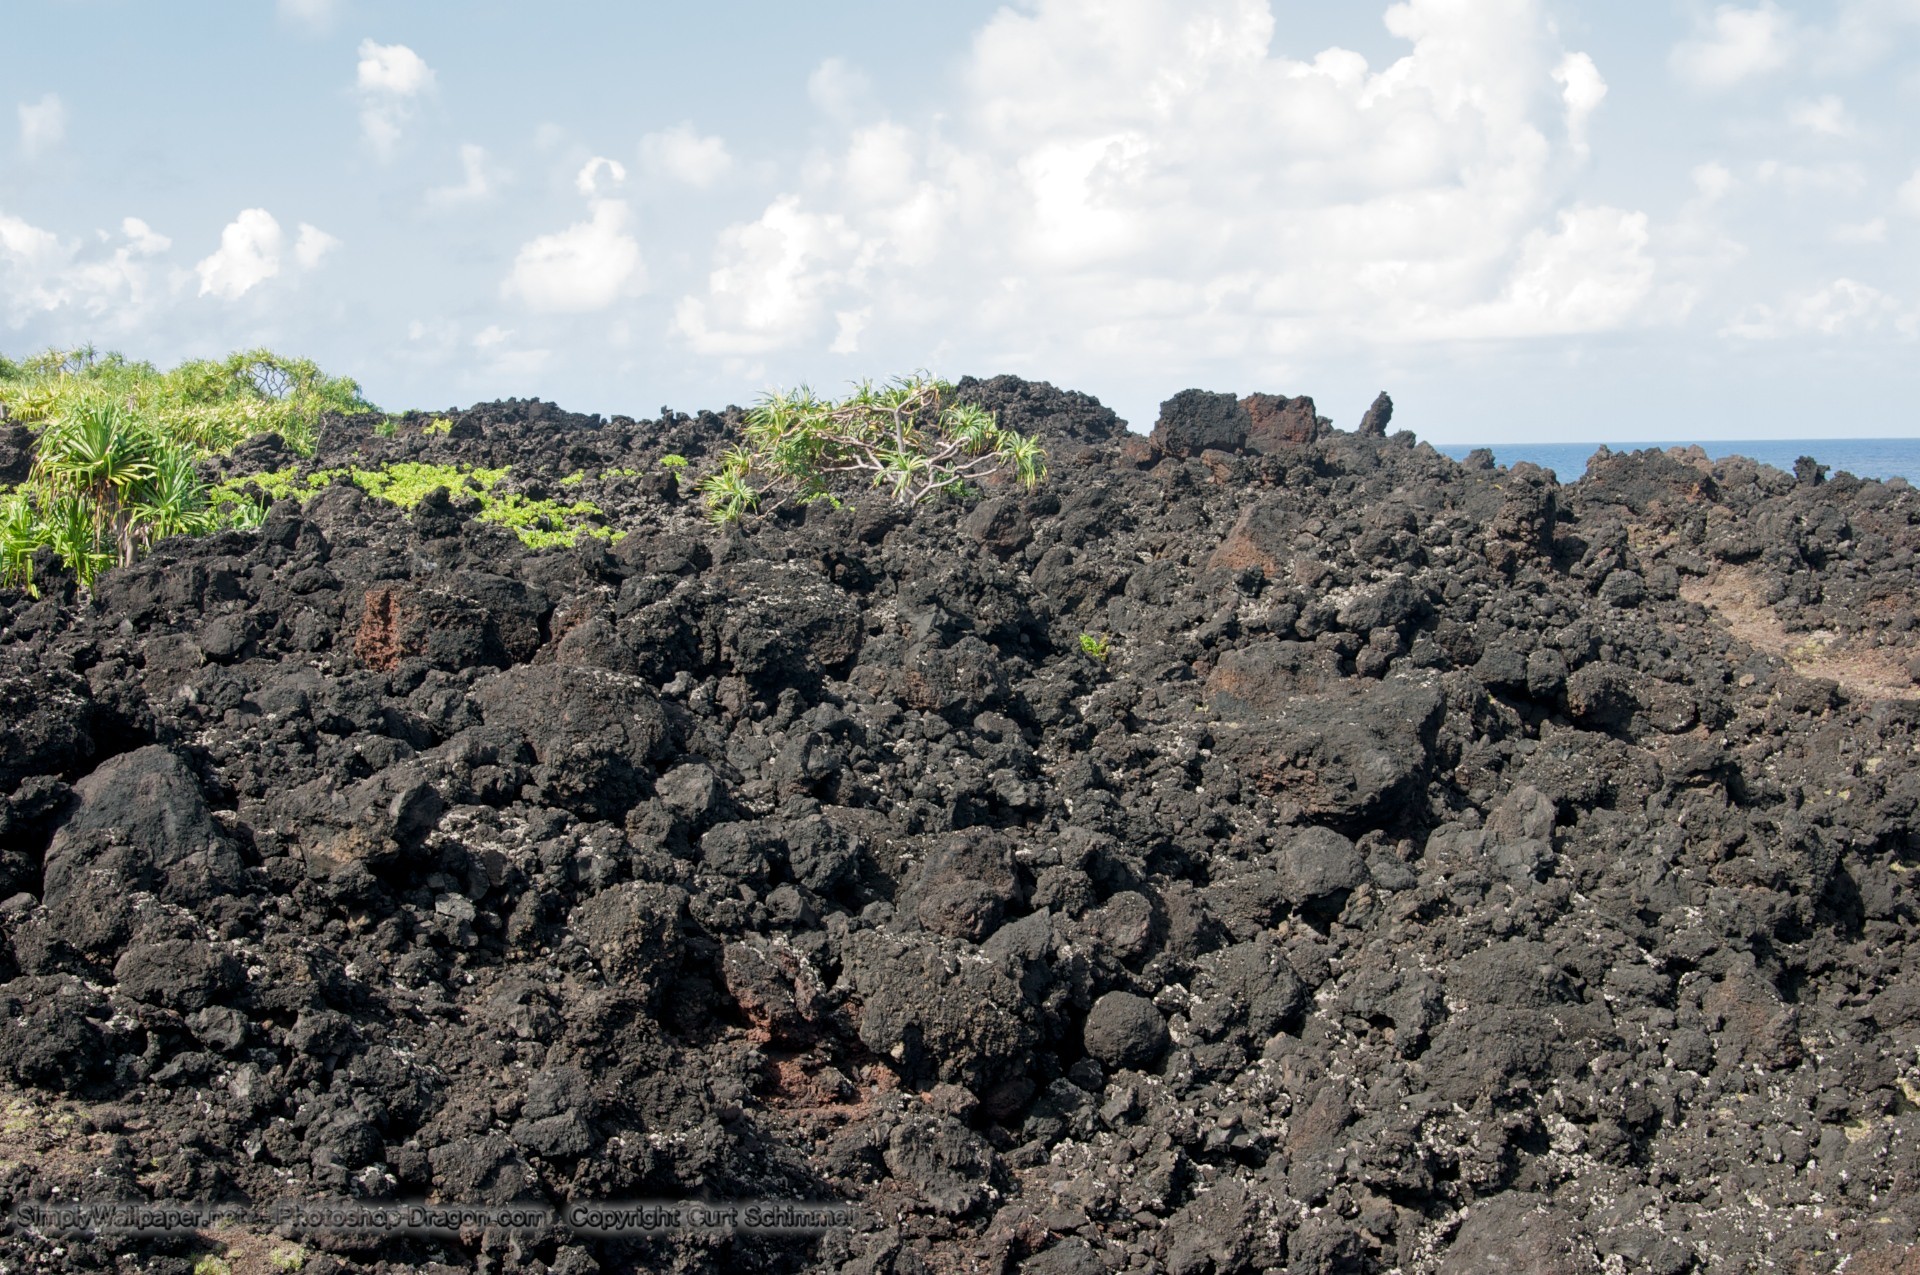 1920x1275 plants grow amid a rough field of lava rocks on Hawaii